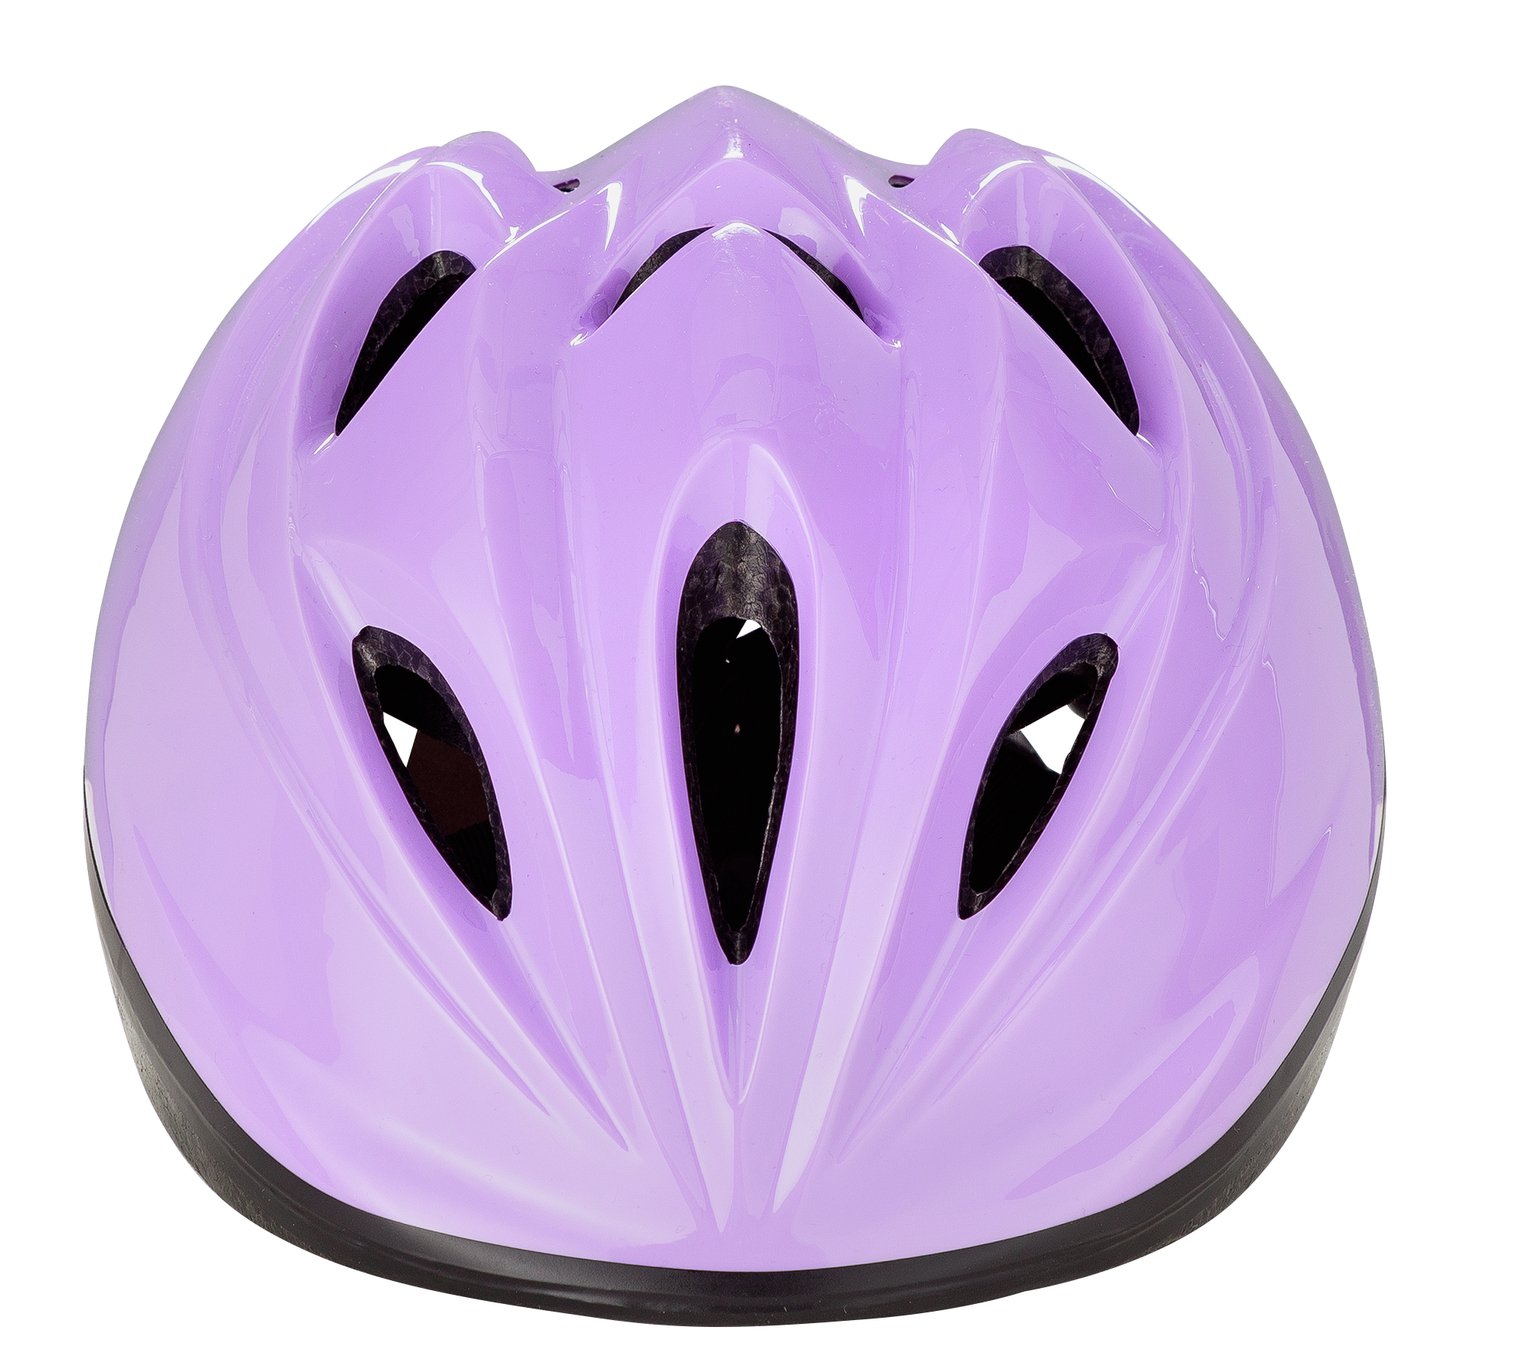 argos bike helmets